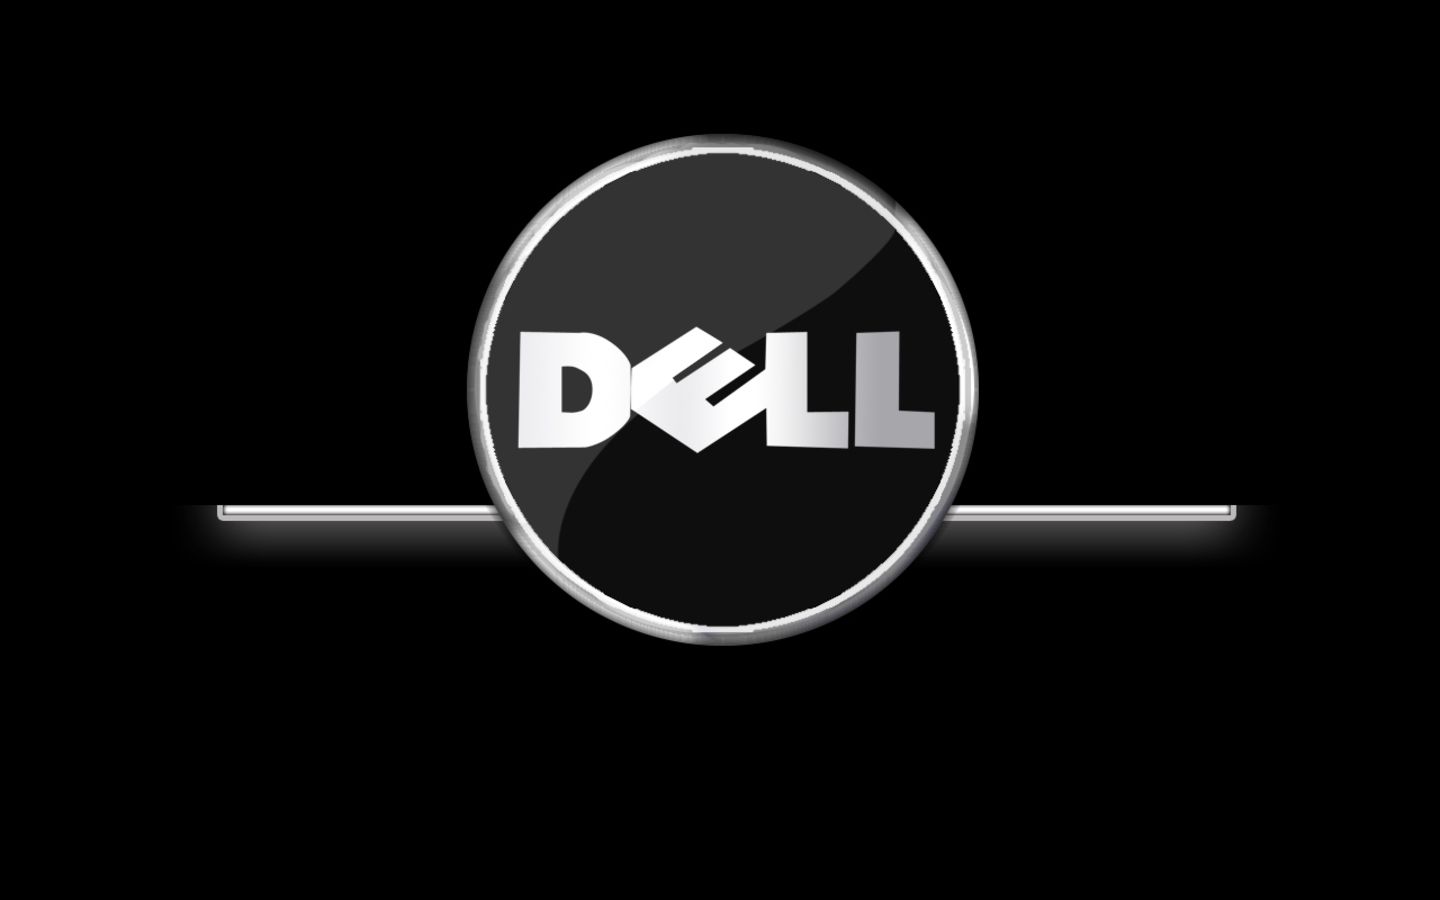 Dell Brand Logo Laptop Wallpaper Backgrounds Wallpaper